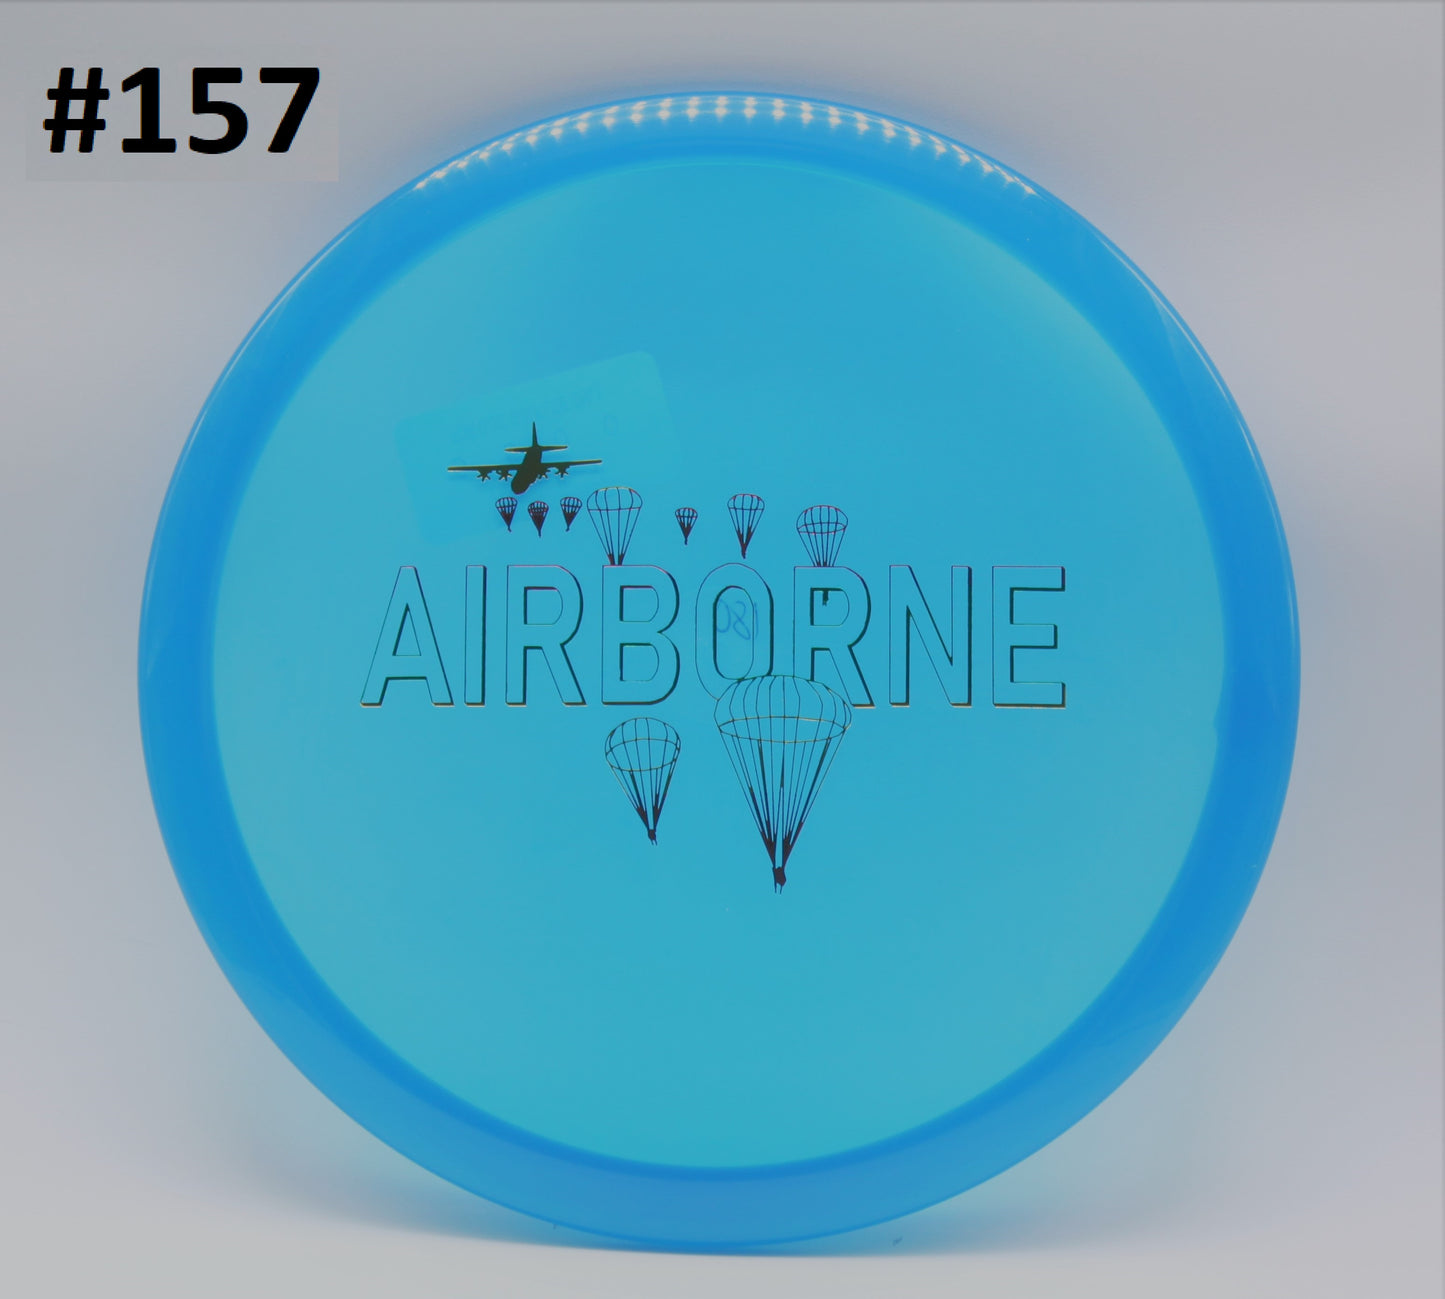 Champion Mako3 - Airborne